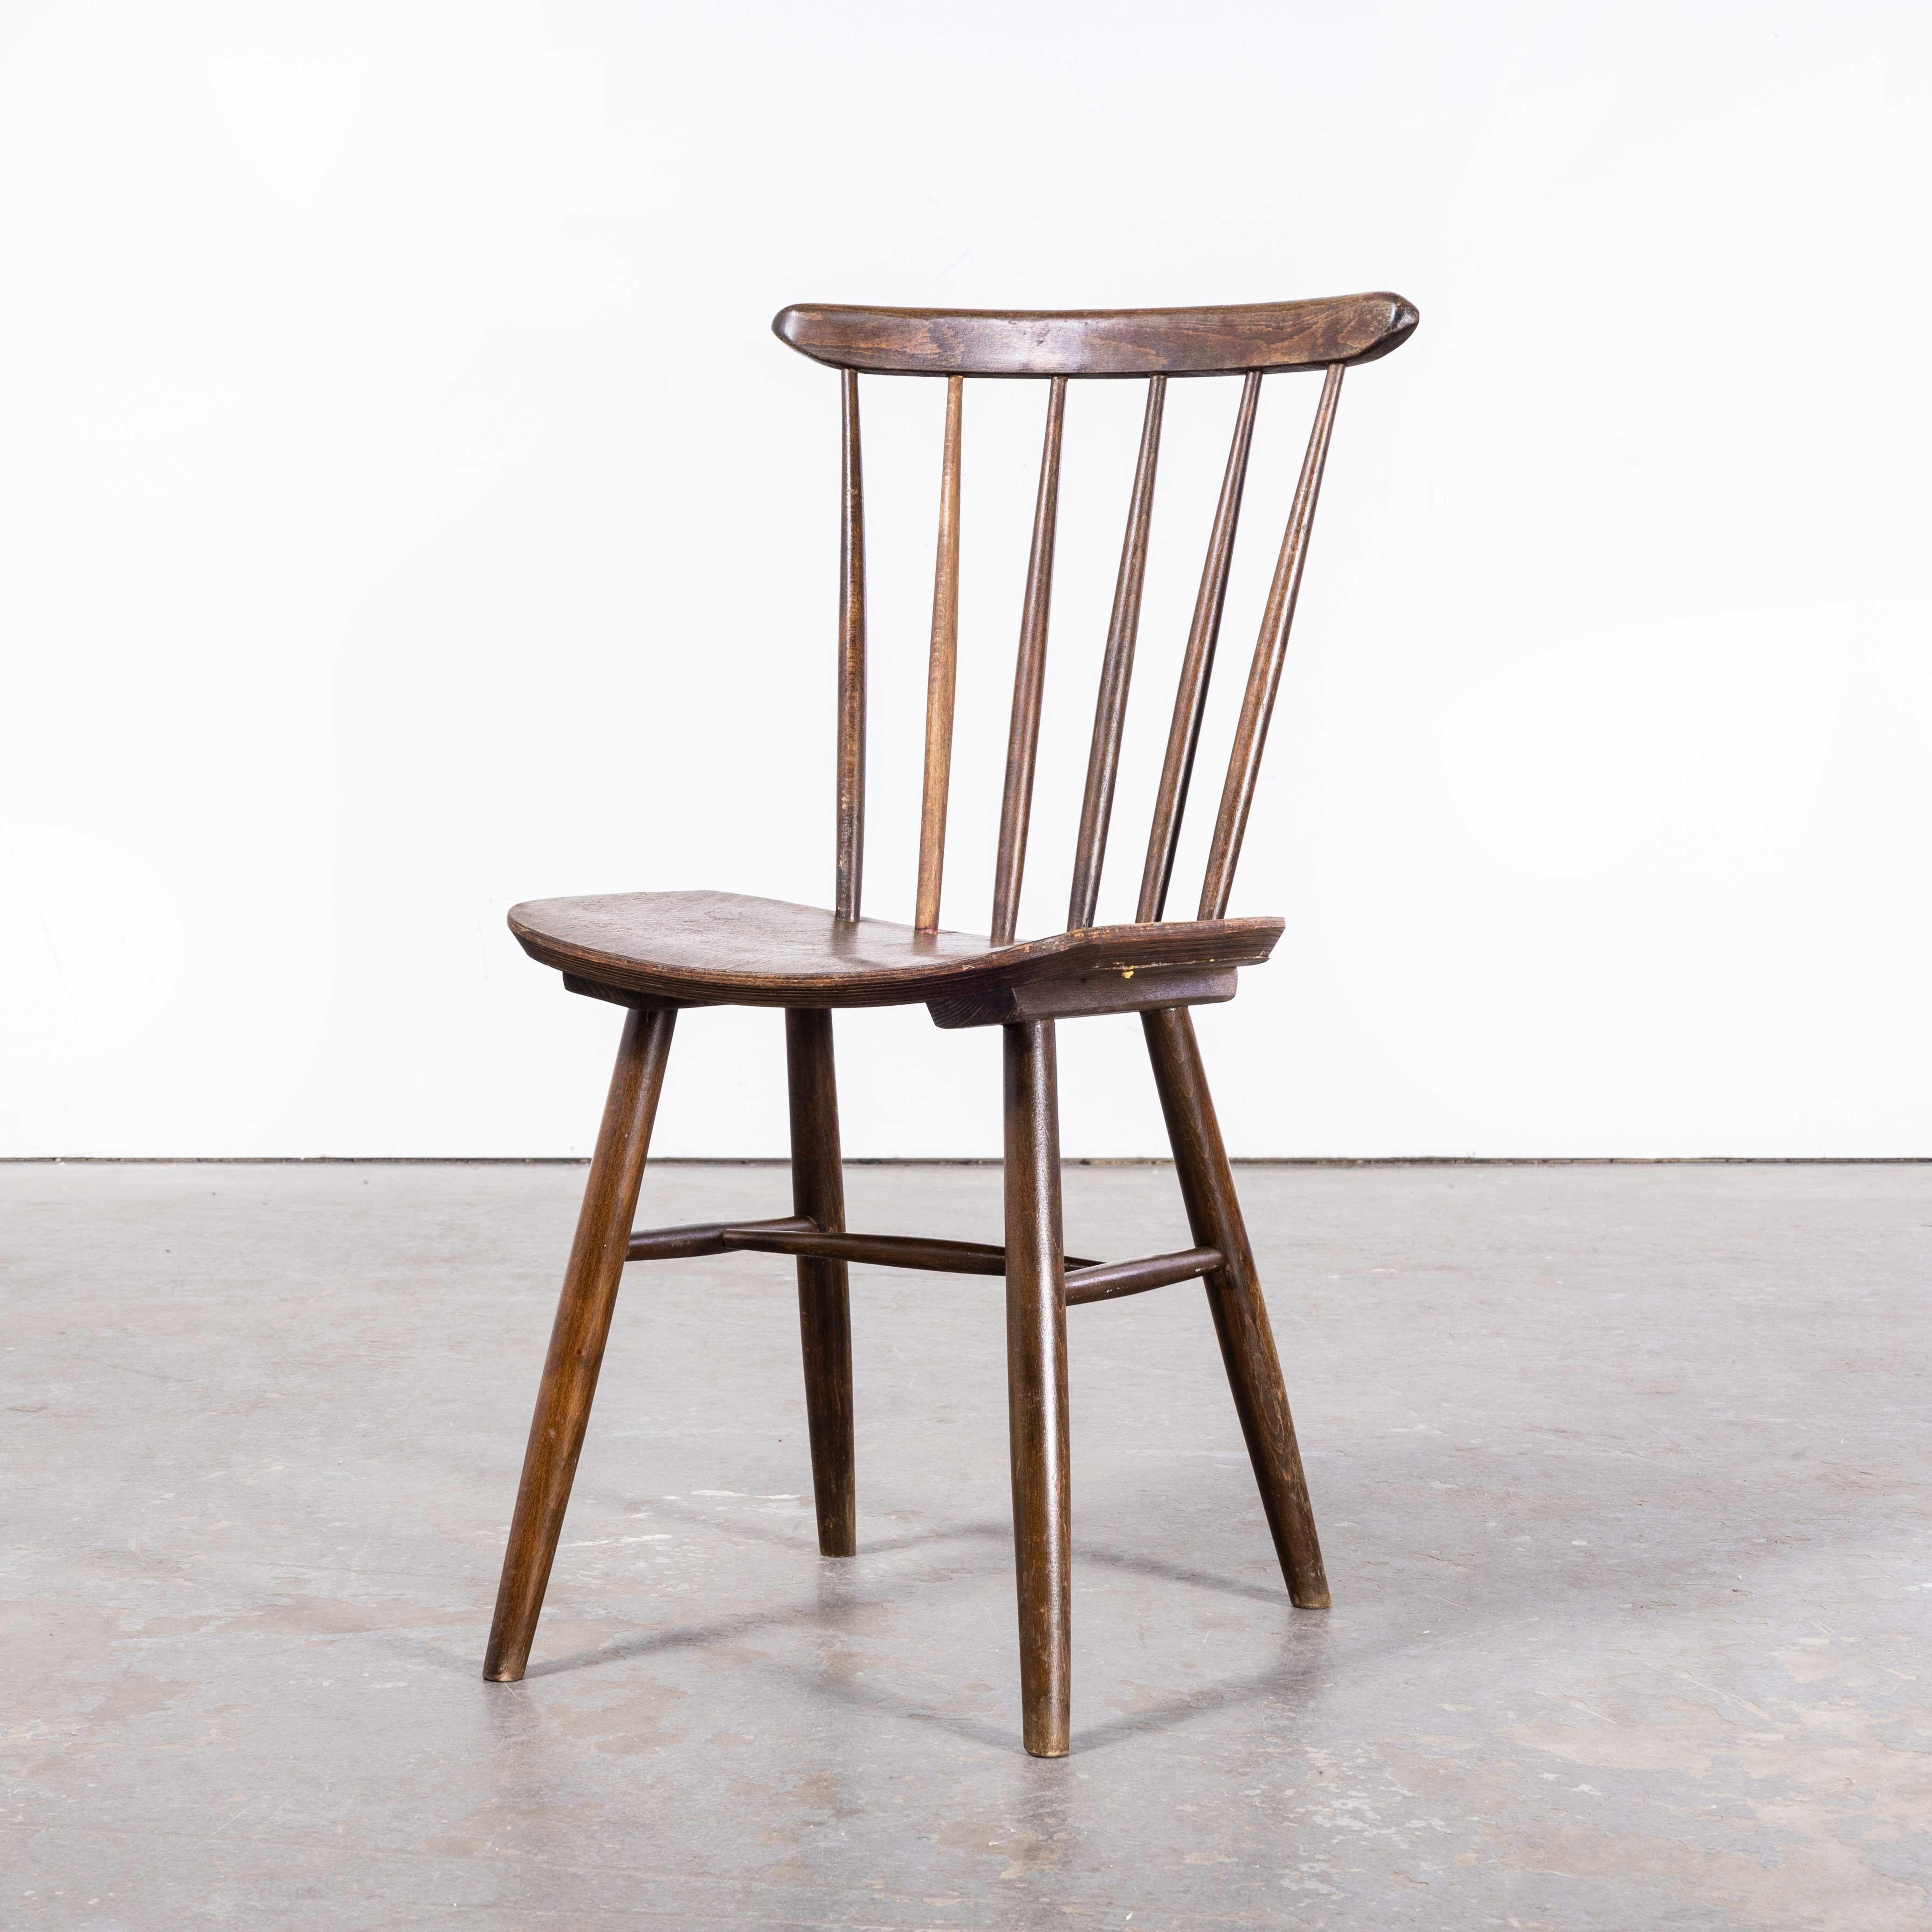 Mid-20th Century 1950s Dark Walnut Stickback Chairs, Saddle Seat, by Ton, Set of Four